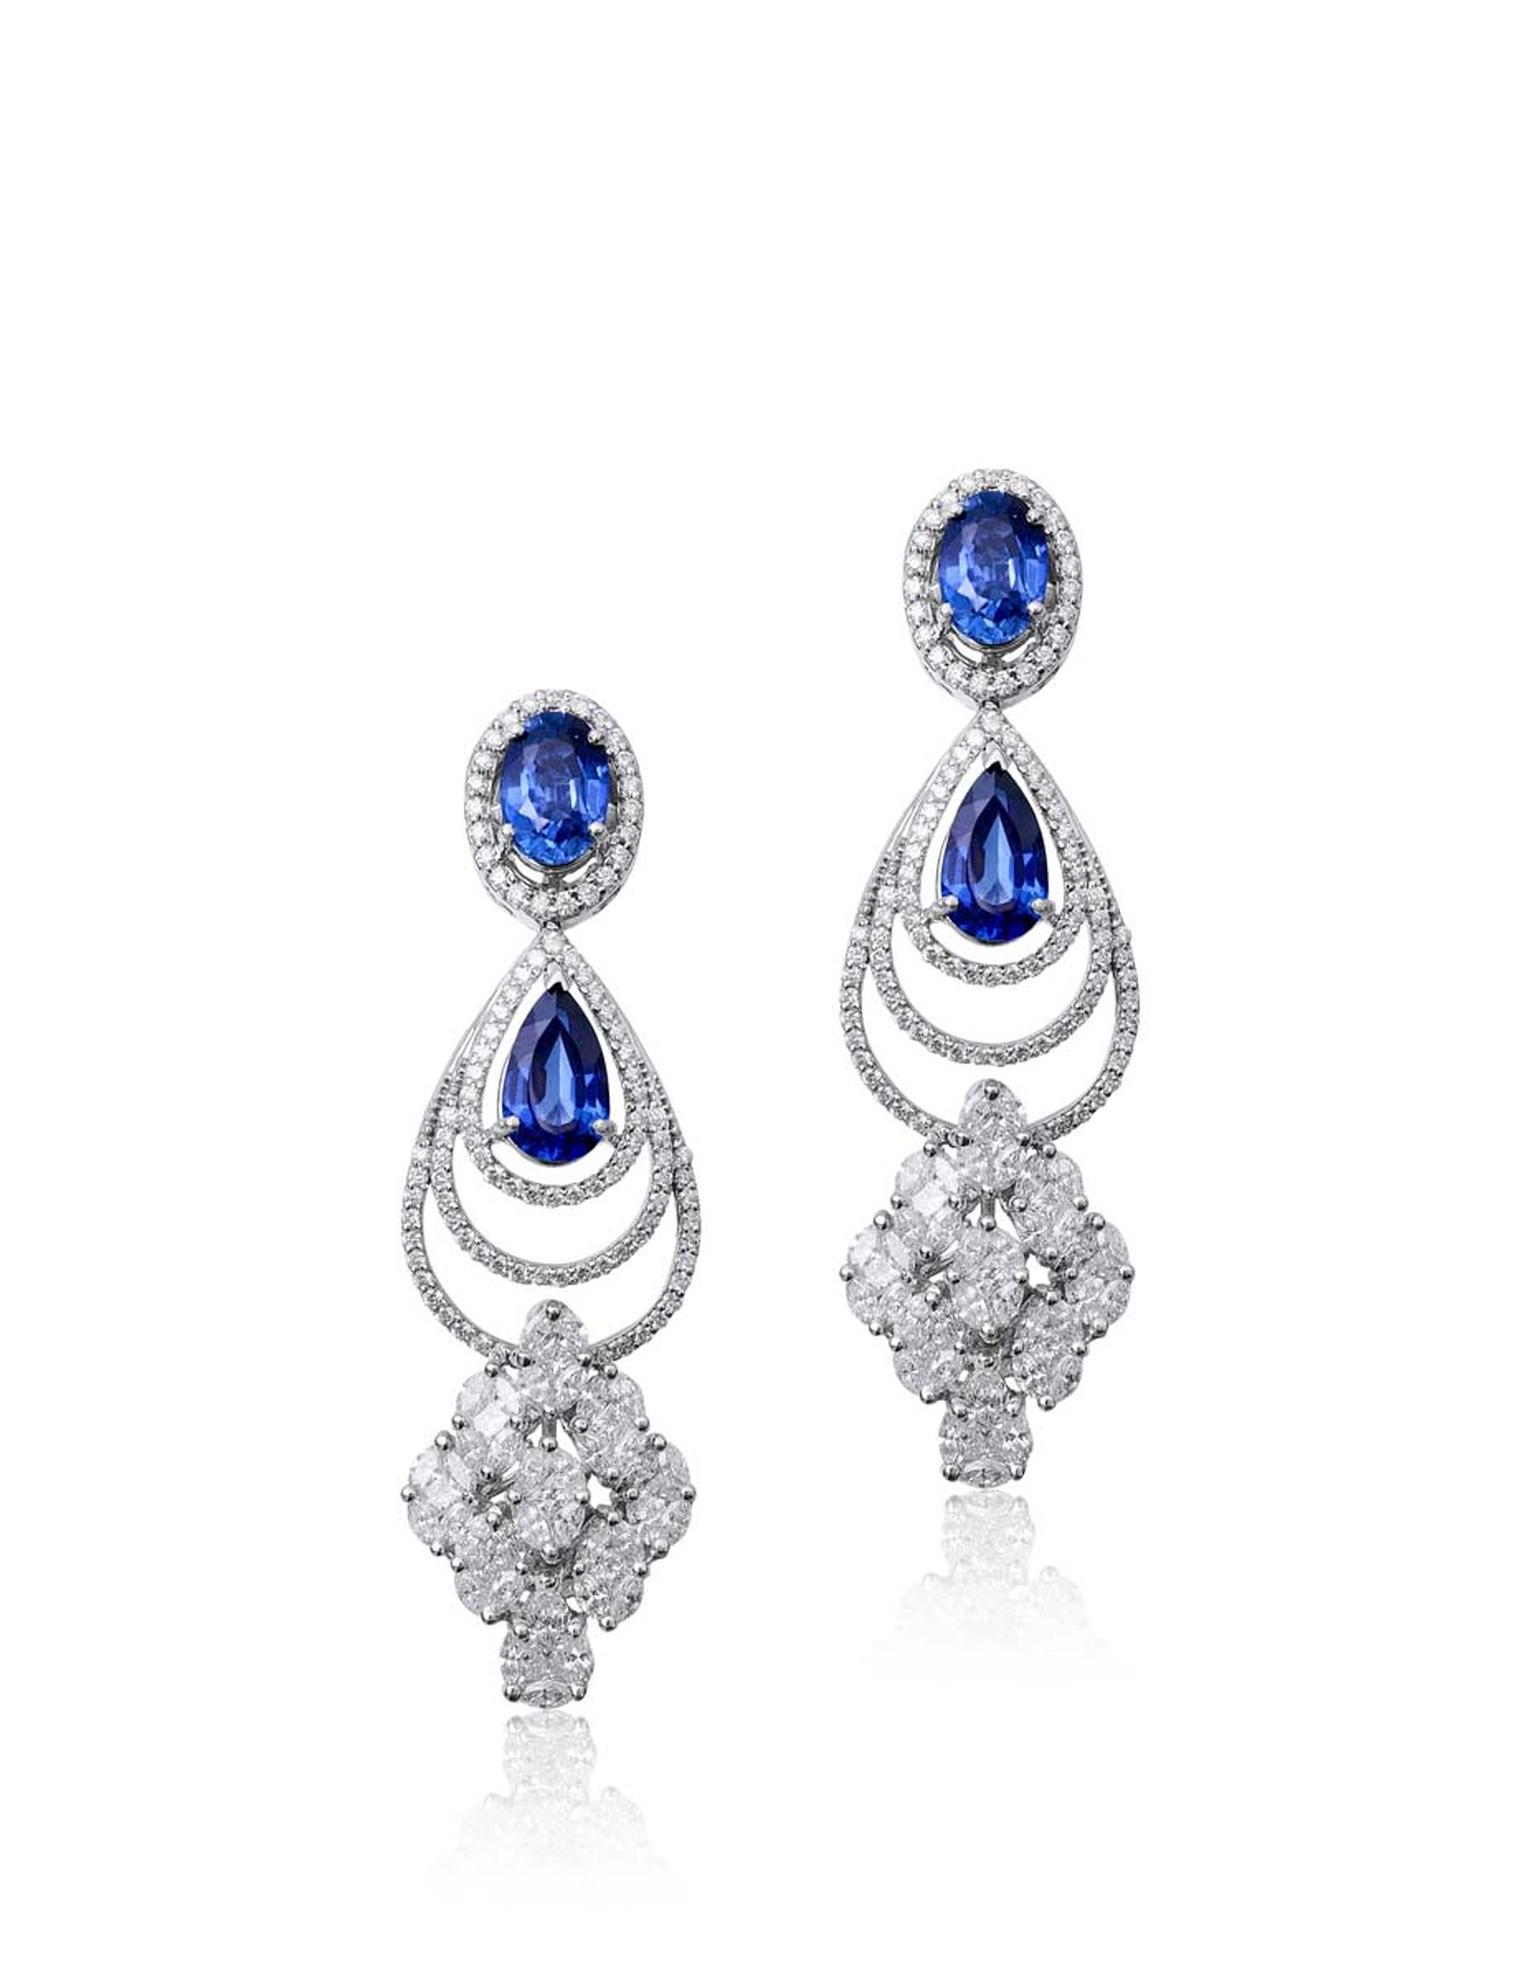 Varuna D Jani earrings featuring diamonds and sapphires